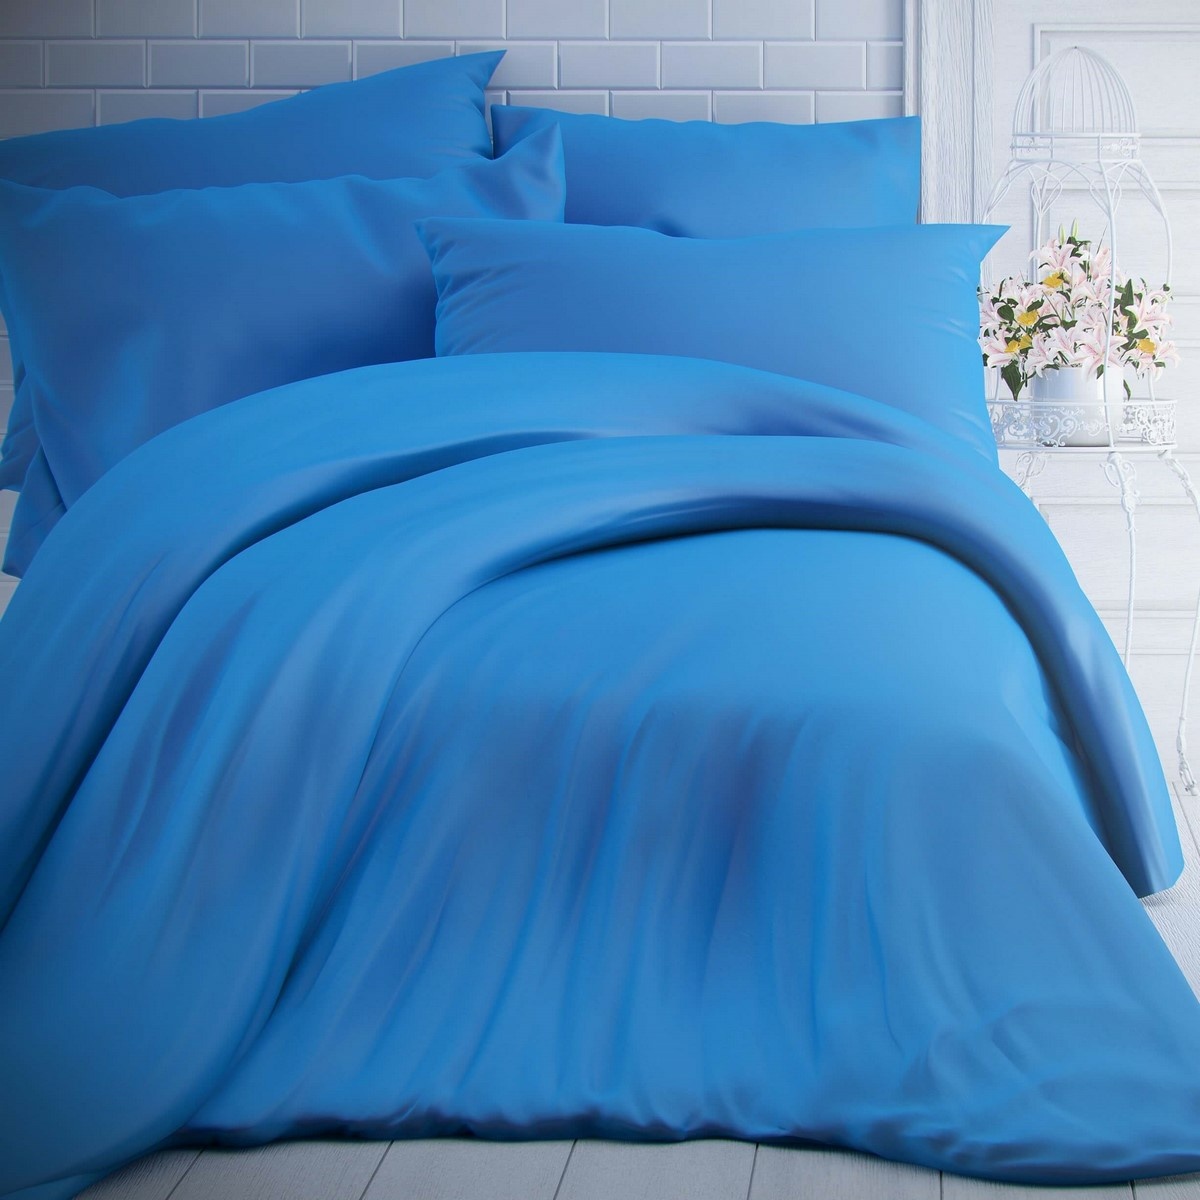 Kvalitex Lenjerie de pat din bumbac albastră, 220 x 200 cm, 2 buc. 70 x 90 cm, 220 x 200 cm, 2 buc. 70 x 90 cm